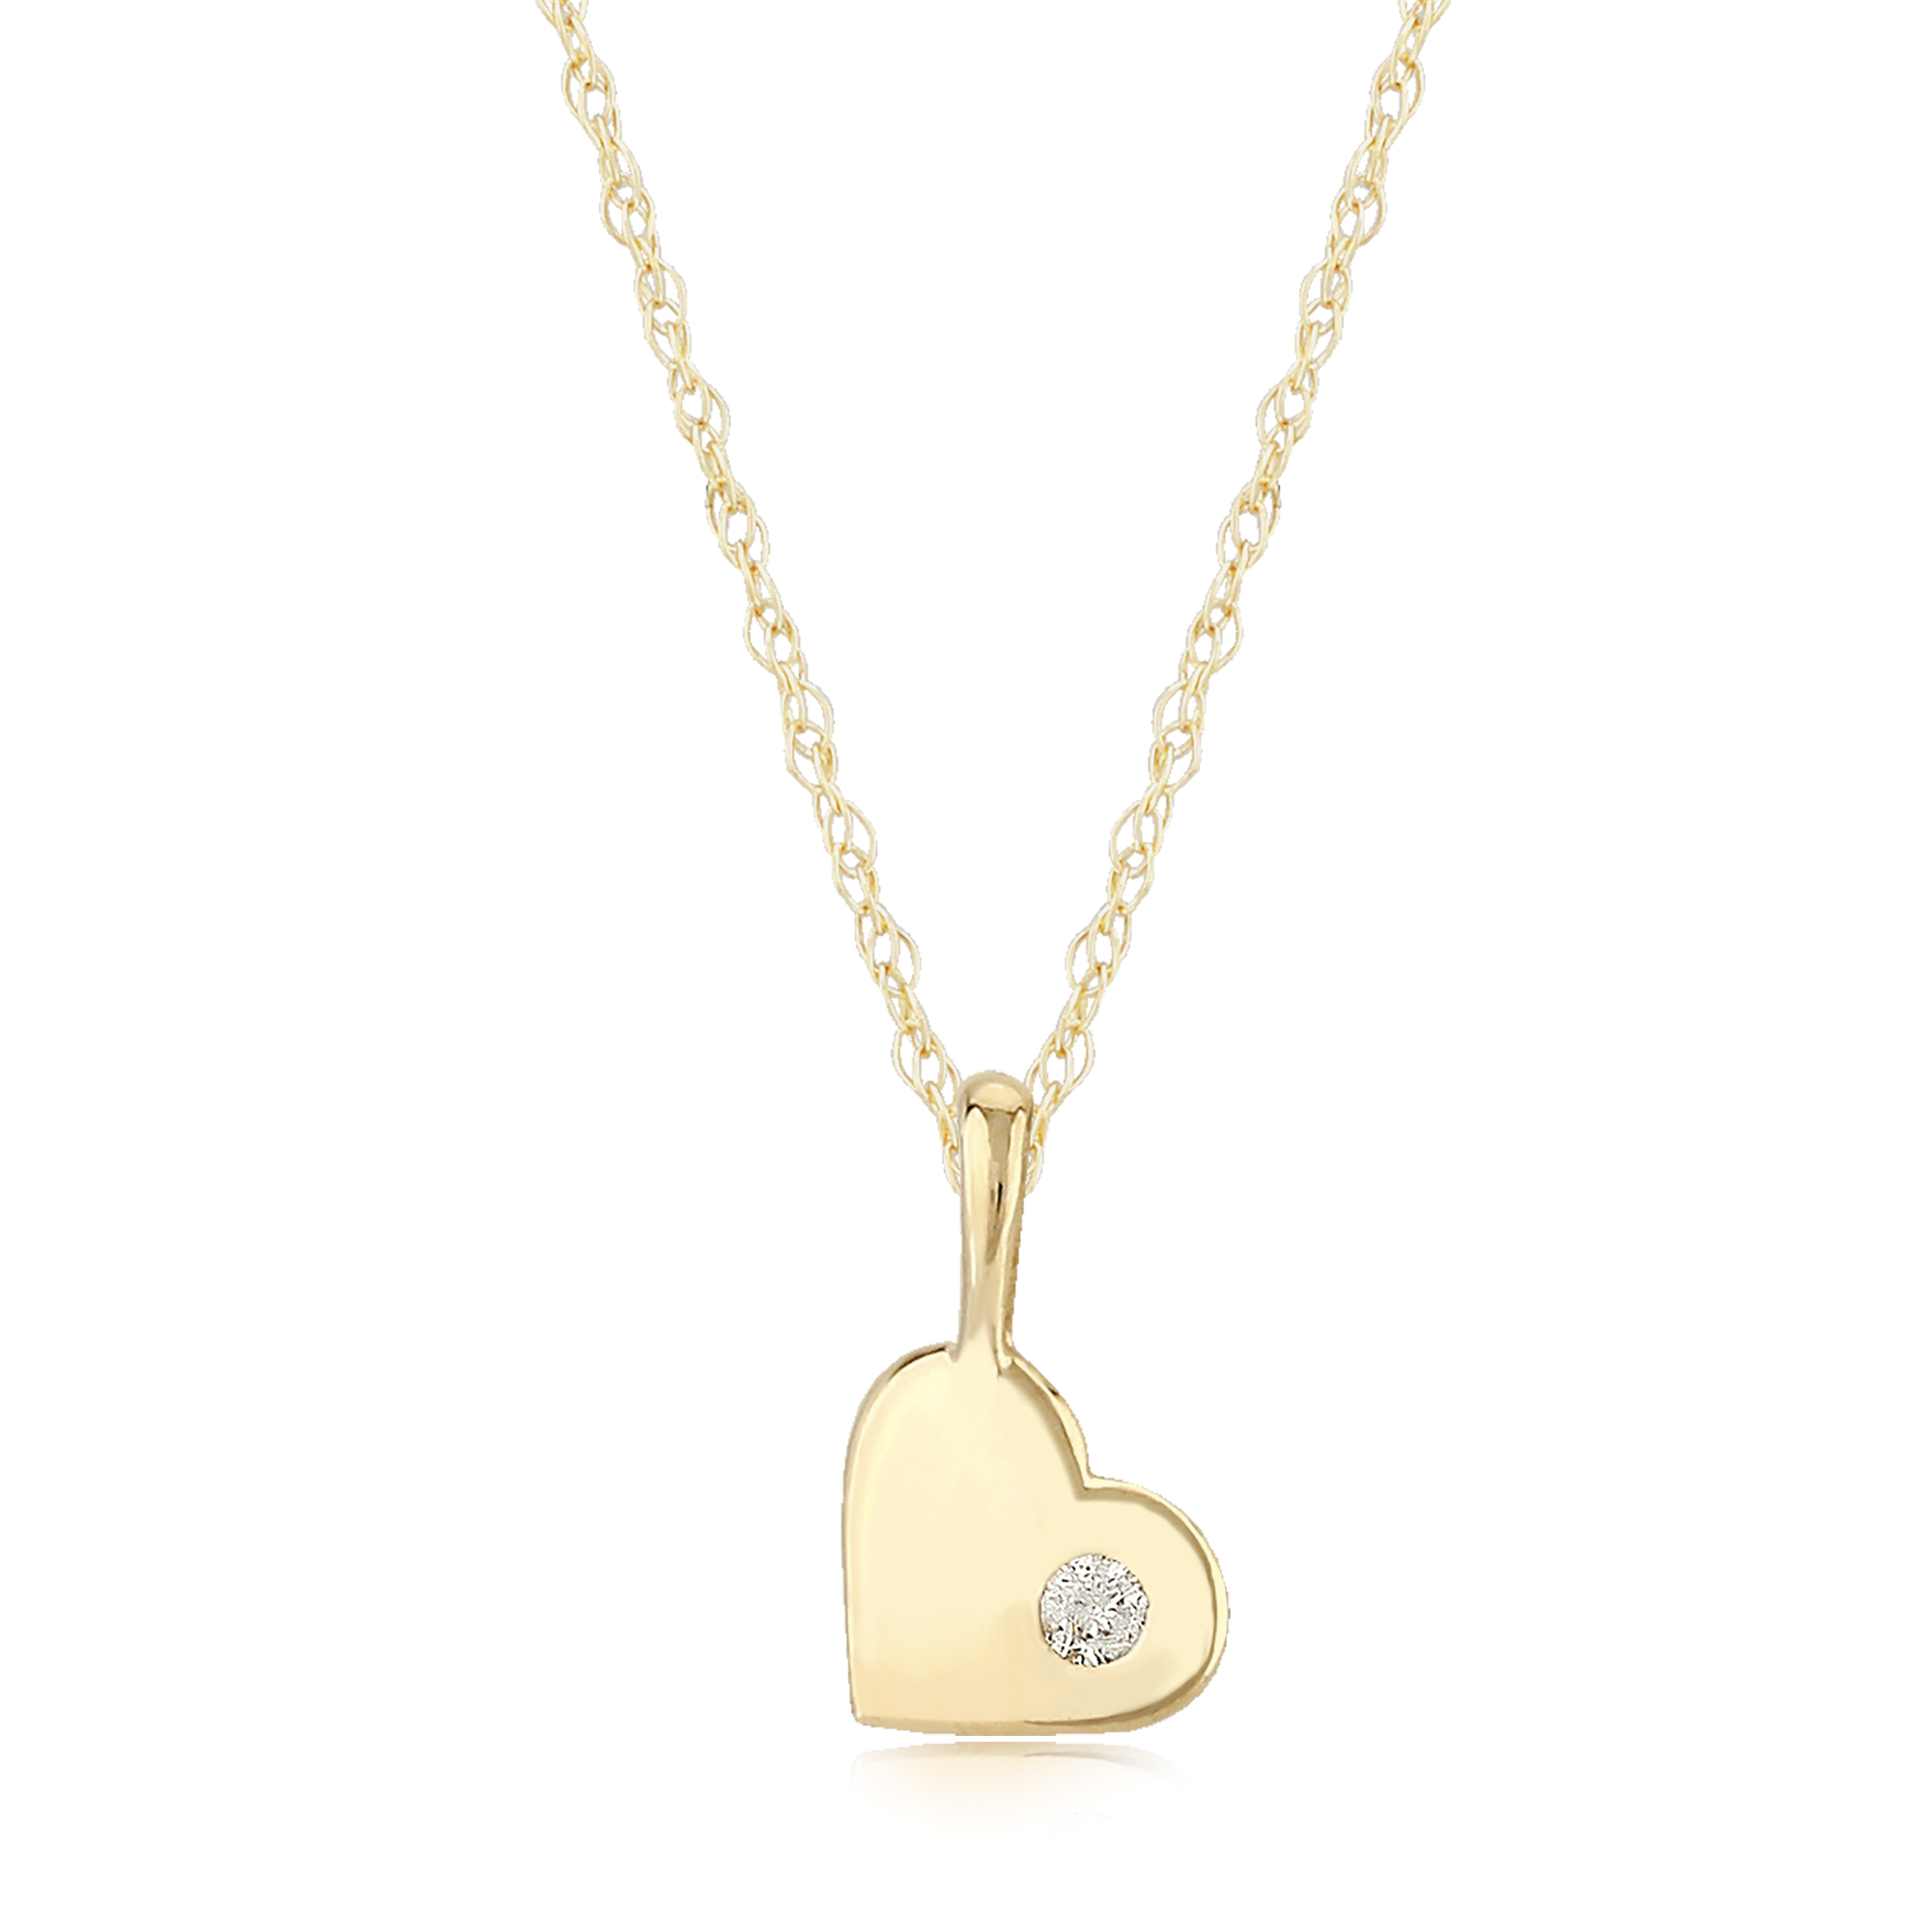 Gold Plated Findings  GLD-776 Heart Pendant Blue Enameled Pendant 6 mm 24k Shiny Gold Heart Mini Hearts Charms Tiny Hearts Pendant